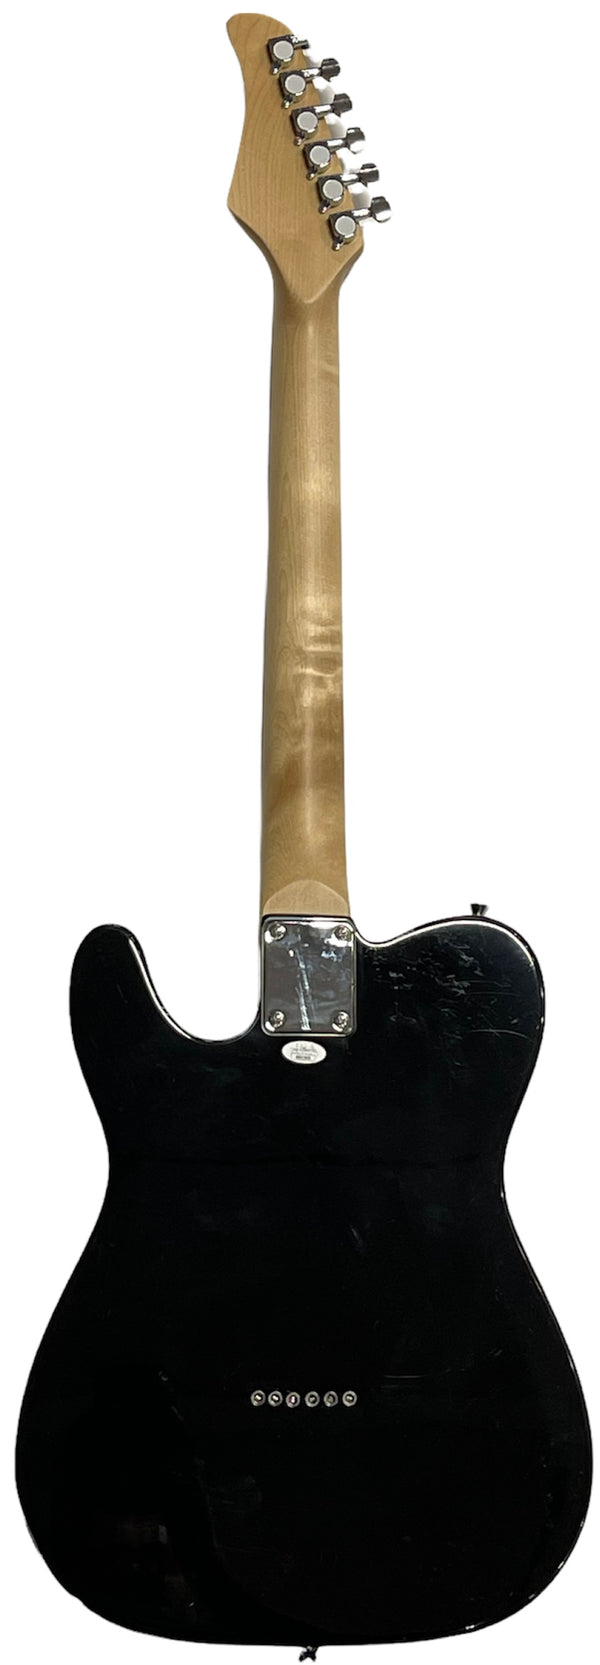 Artimus Pyle Autographed Multi Inscribed Lynyrd Skynyrd Electric Guitar (JSA)